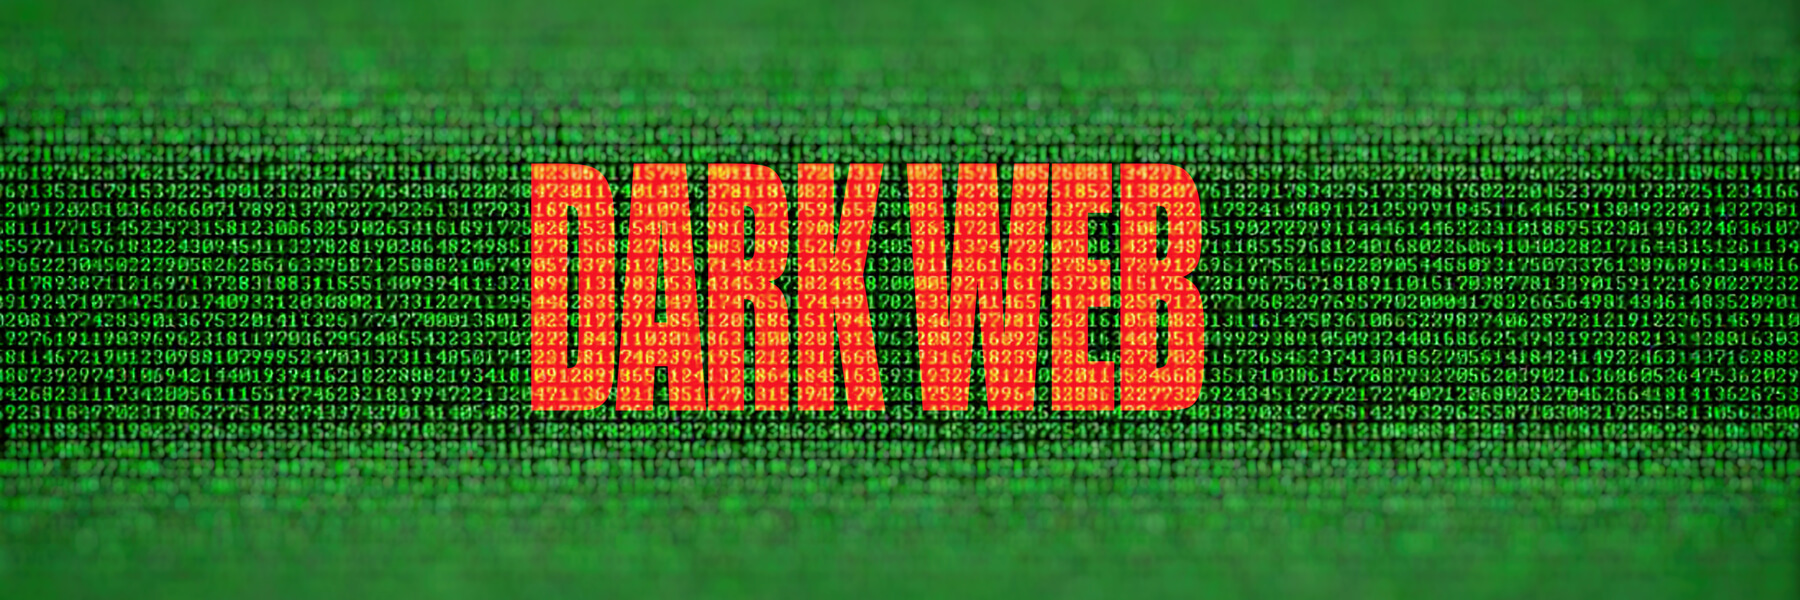 Dark web sites name list